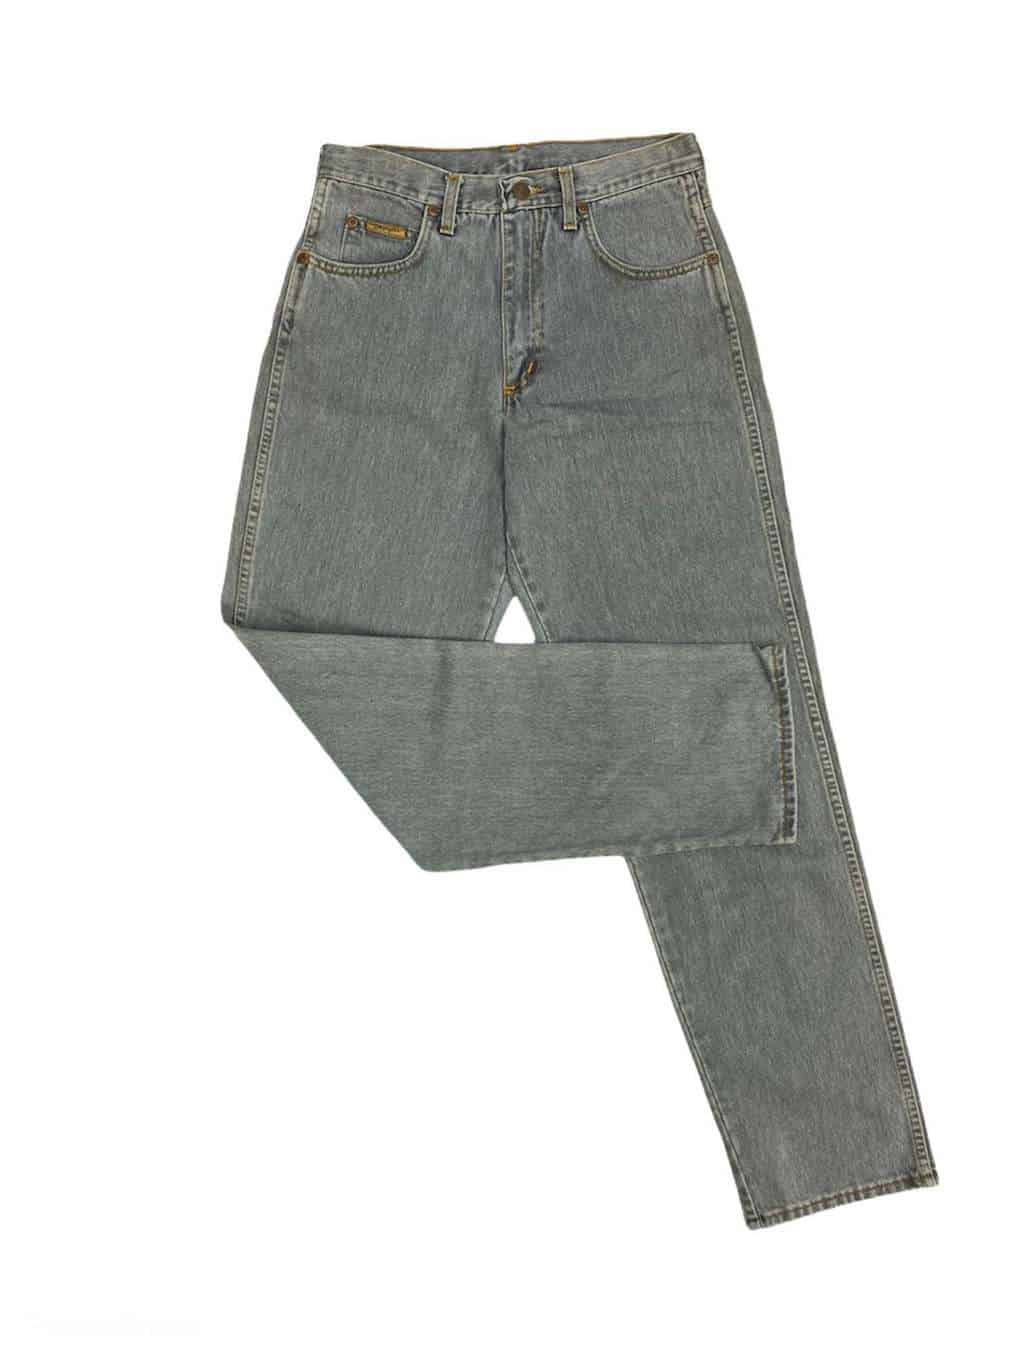 mund Hubert Hudson feminin 90s Vintage Wrangler Indiana jeans in grey, made in the UK, deadstock - W29  x L32 - St Cyr Vintage